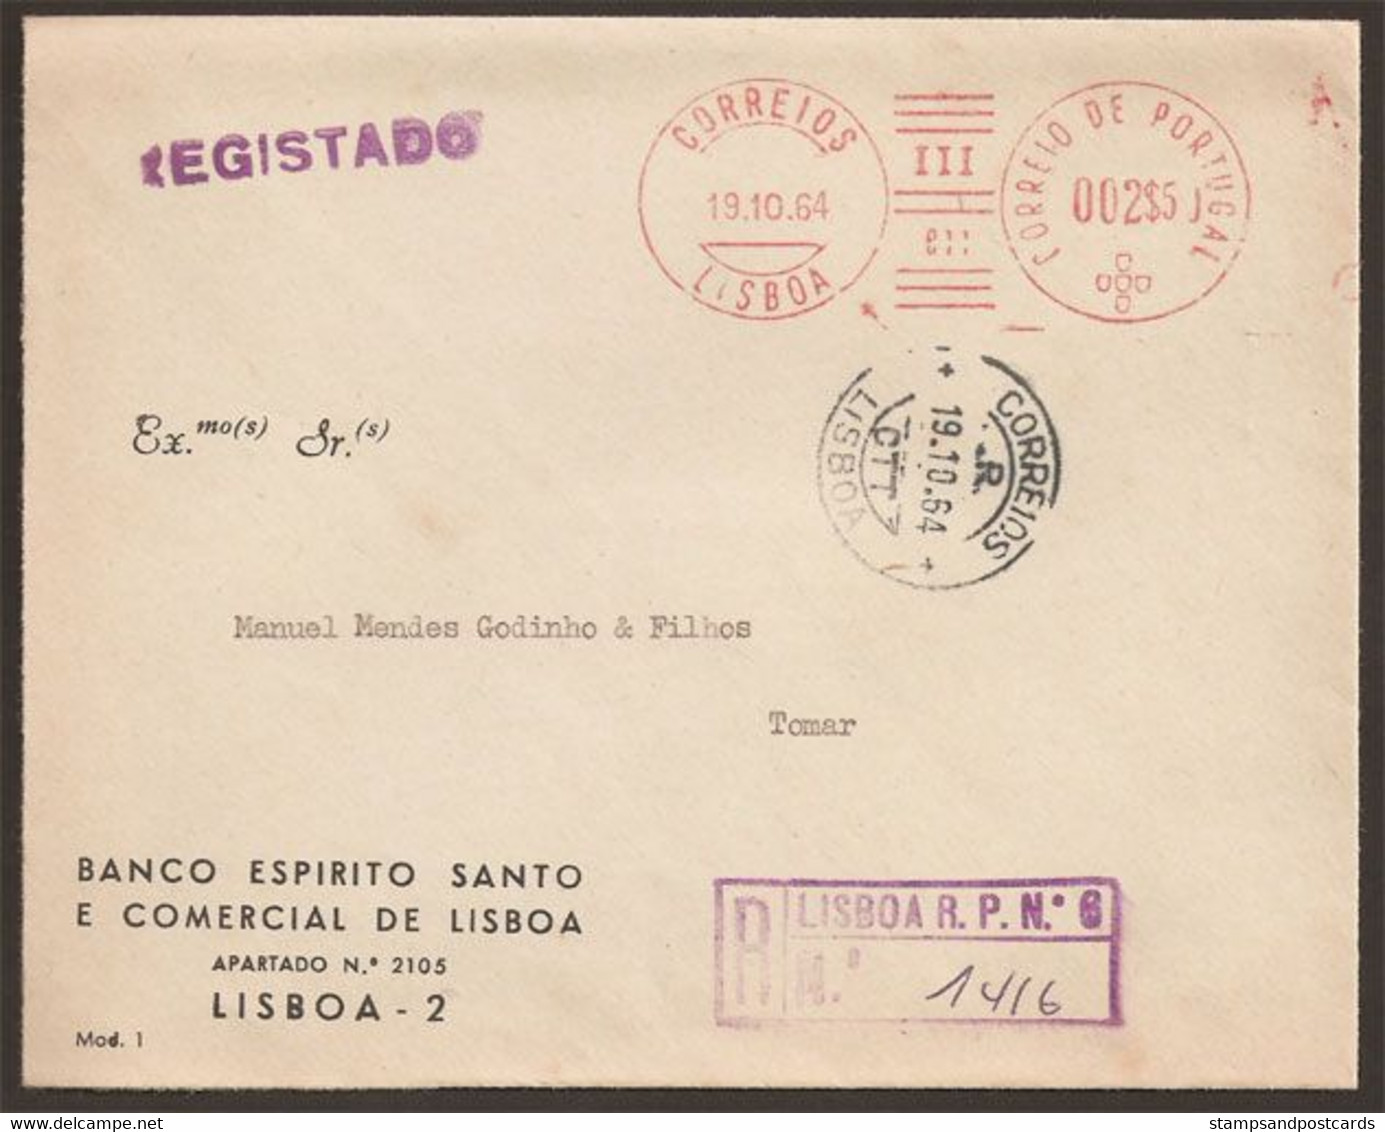 Portugal EMA Cachet Rouge Banque BESCL 1964 Recommandée Privé Nº 6 Meter Stamp BESCL Bank Private Registration Nº 6 - Machines à Affranchir (EMA)